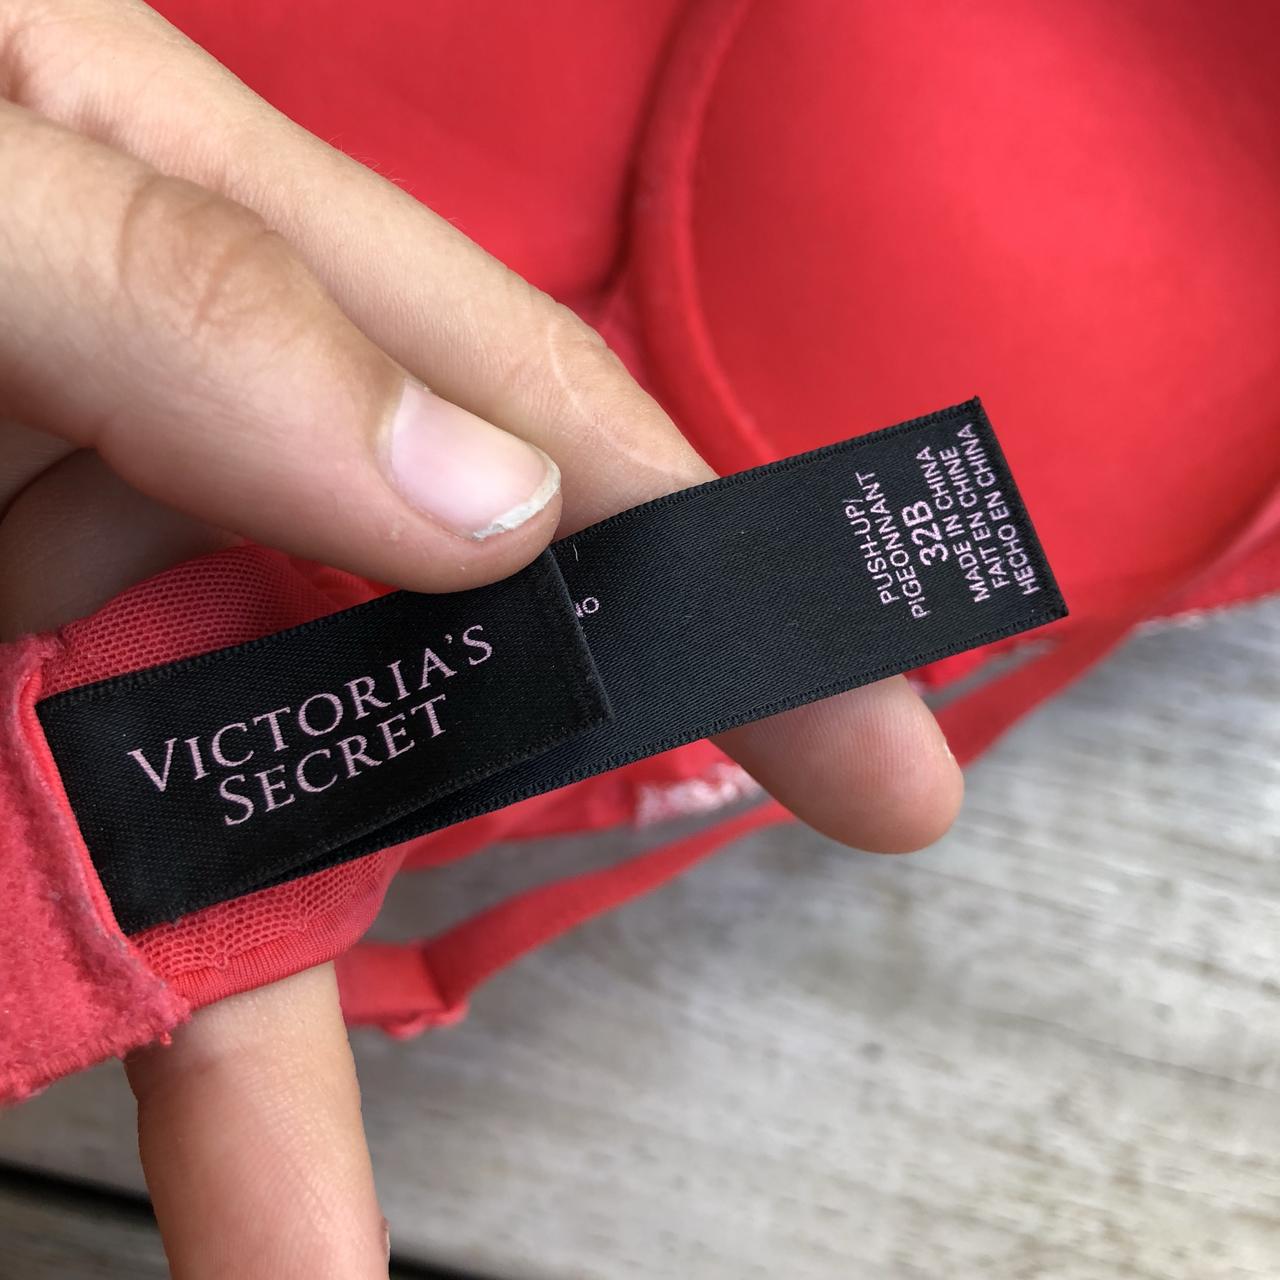 Victoria’s Secret 32B push up bra. No stains or